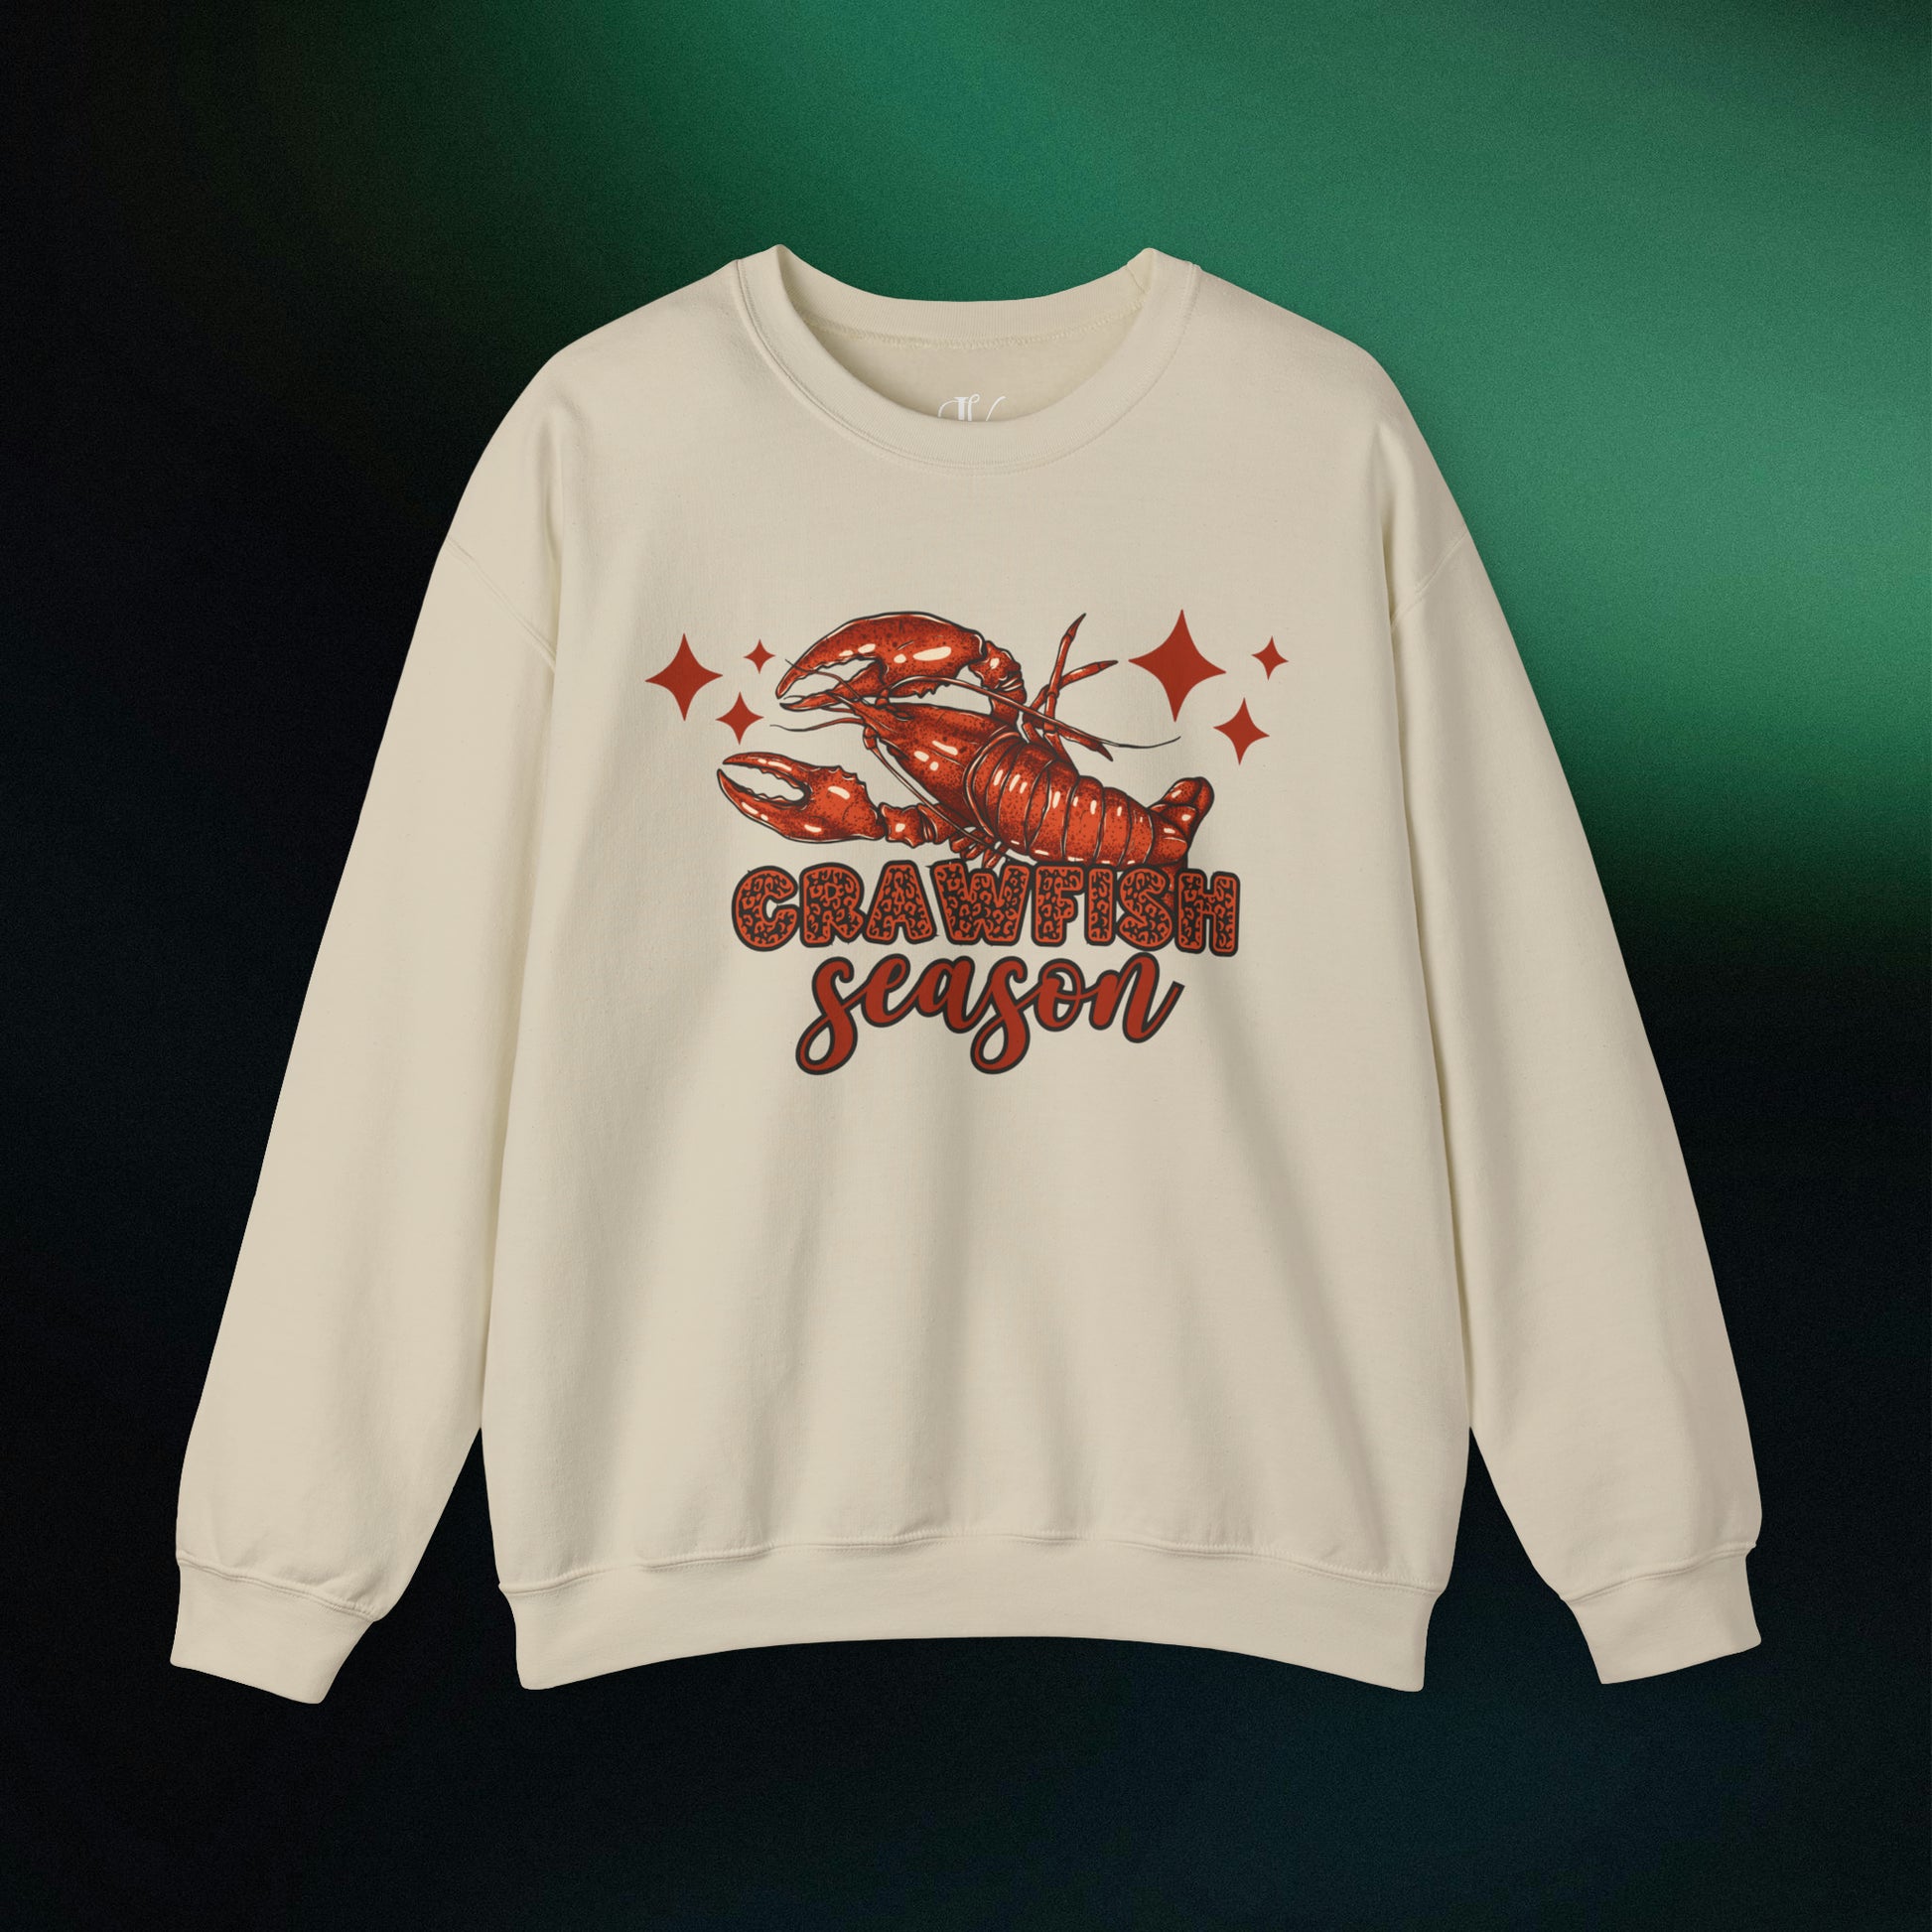 Celebrate Crawfish Season: Mardi Gras Sweatshirt, Crawfish Lovers Sweater, Louisiana Crew Tee | Crawfish Season Apparel - Embrace the Flavor and Fun of the Season with Stylish Crawfish-Themed Wear! Sweatshirt S Sand 